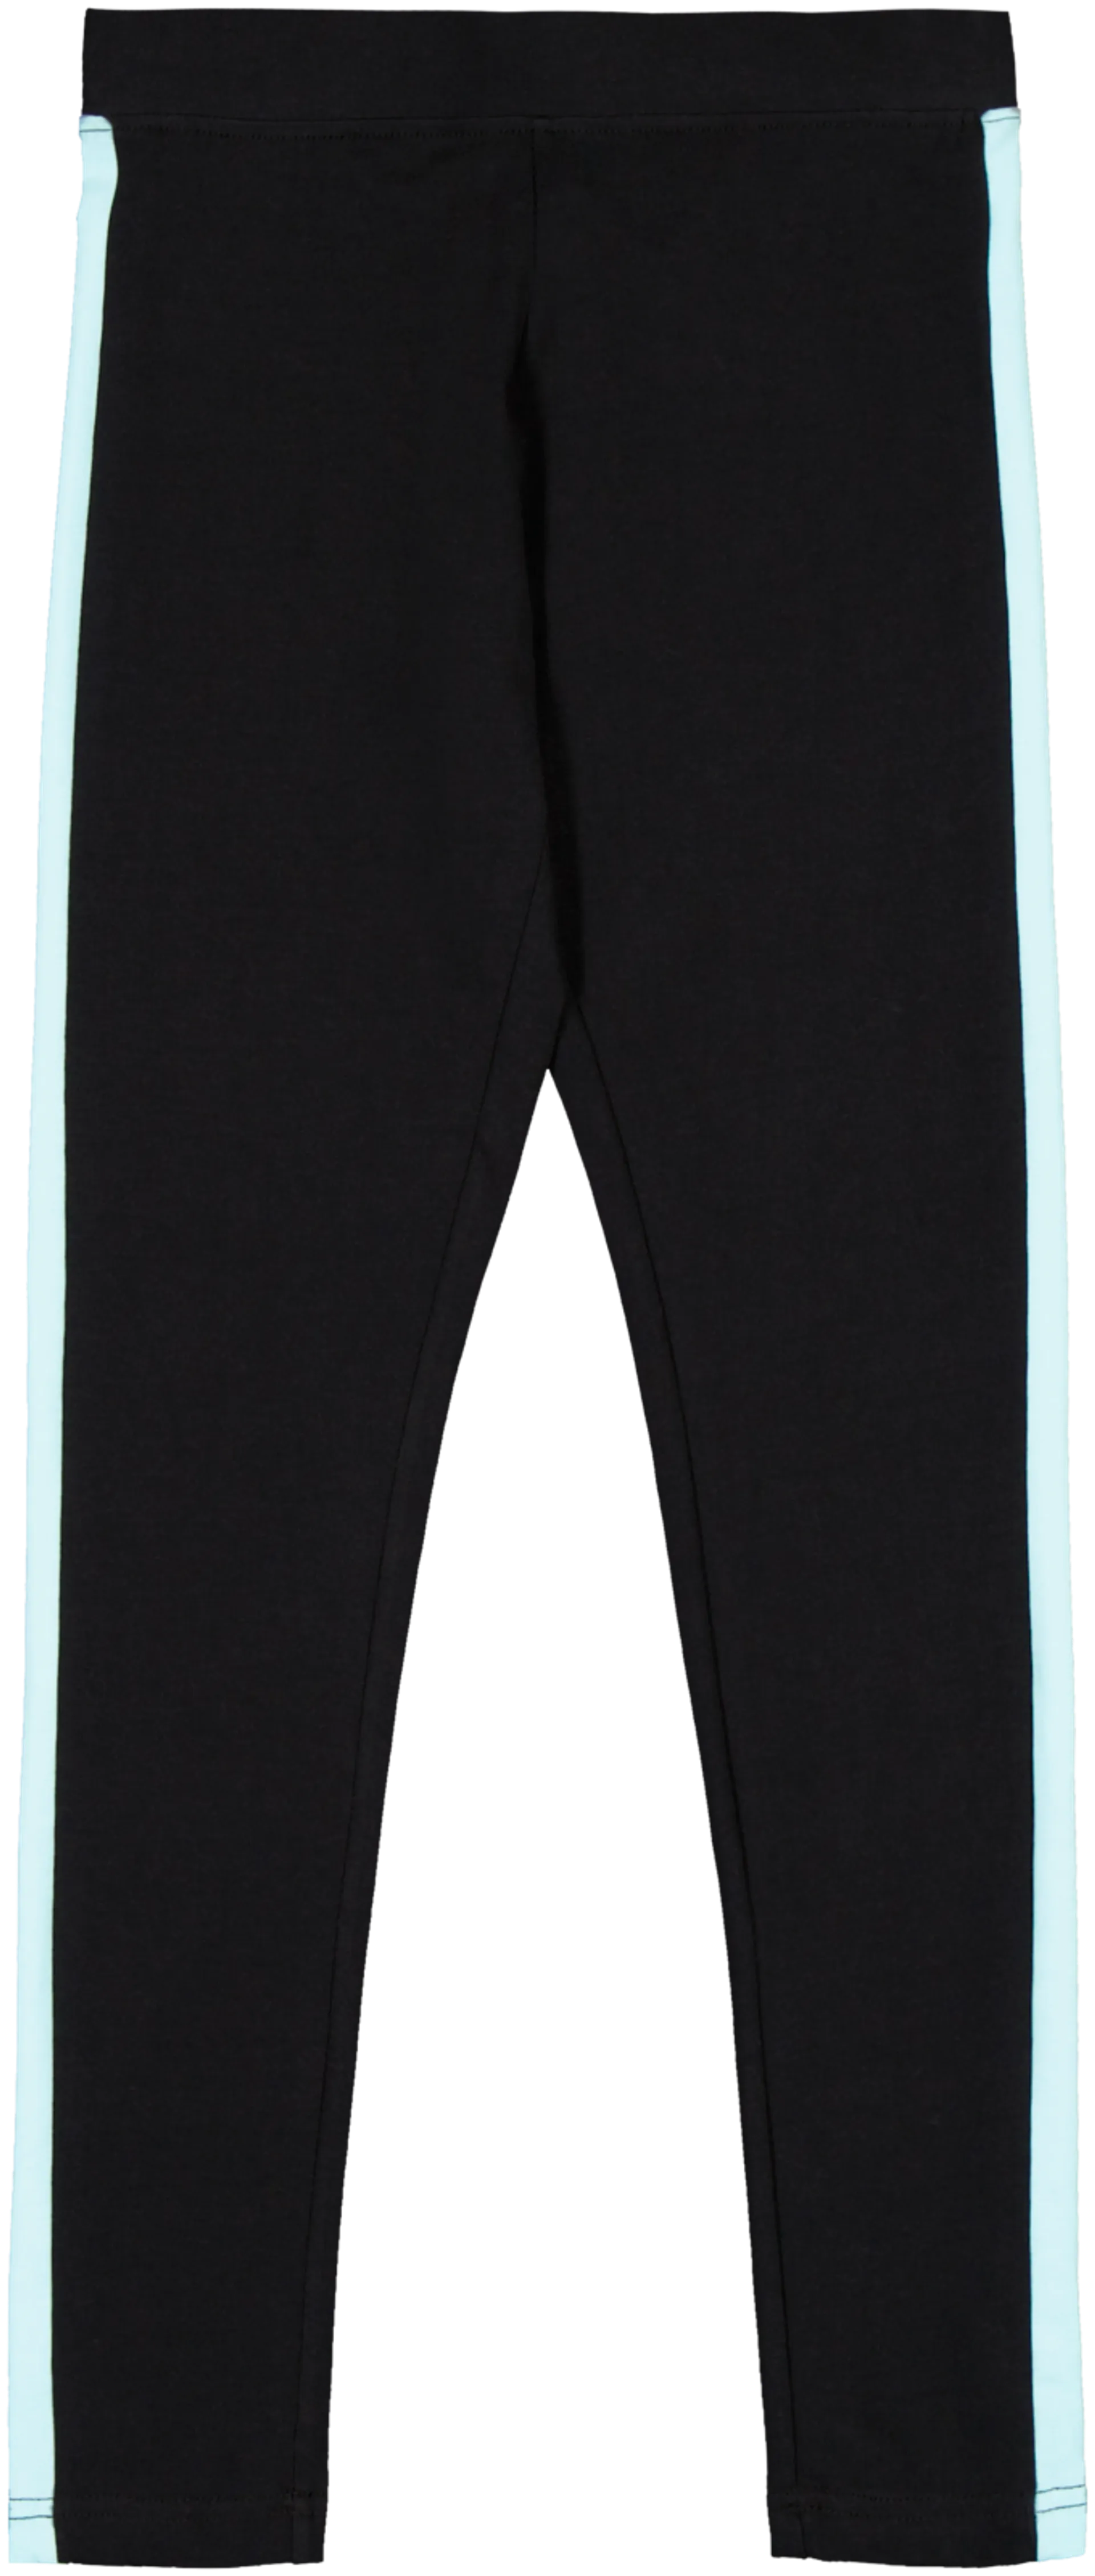 House nuorten leggingsit 23TH032419 - Black/Turquoise